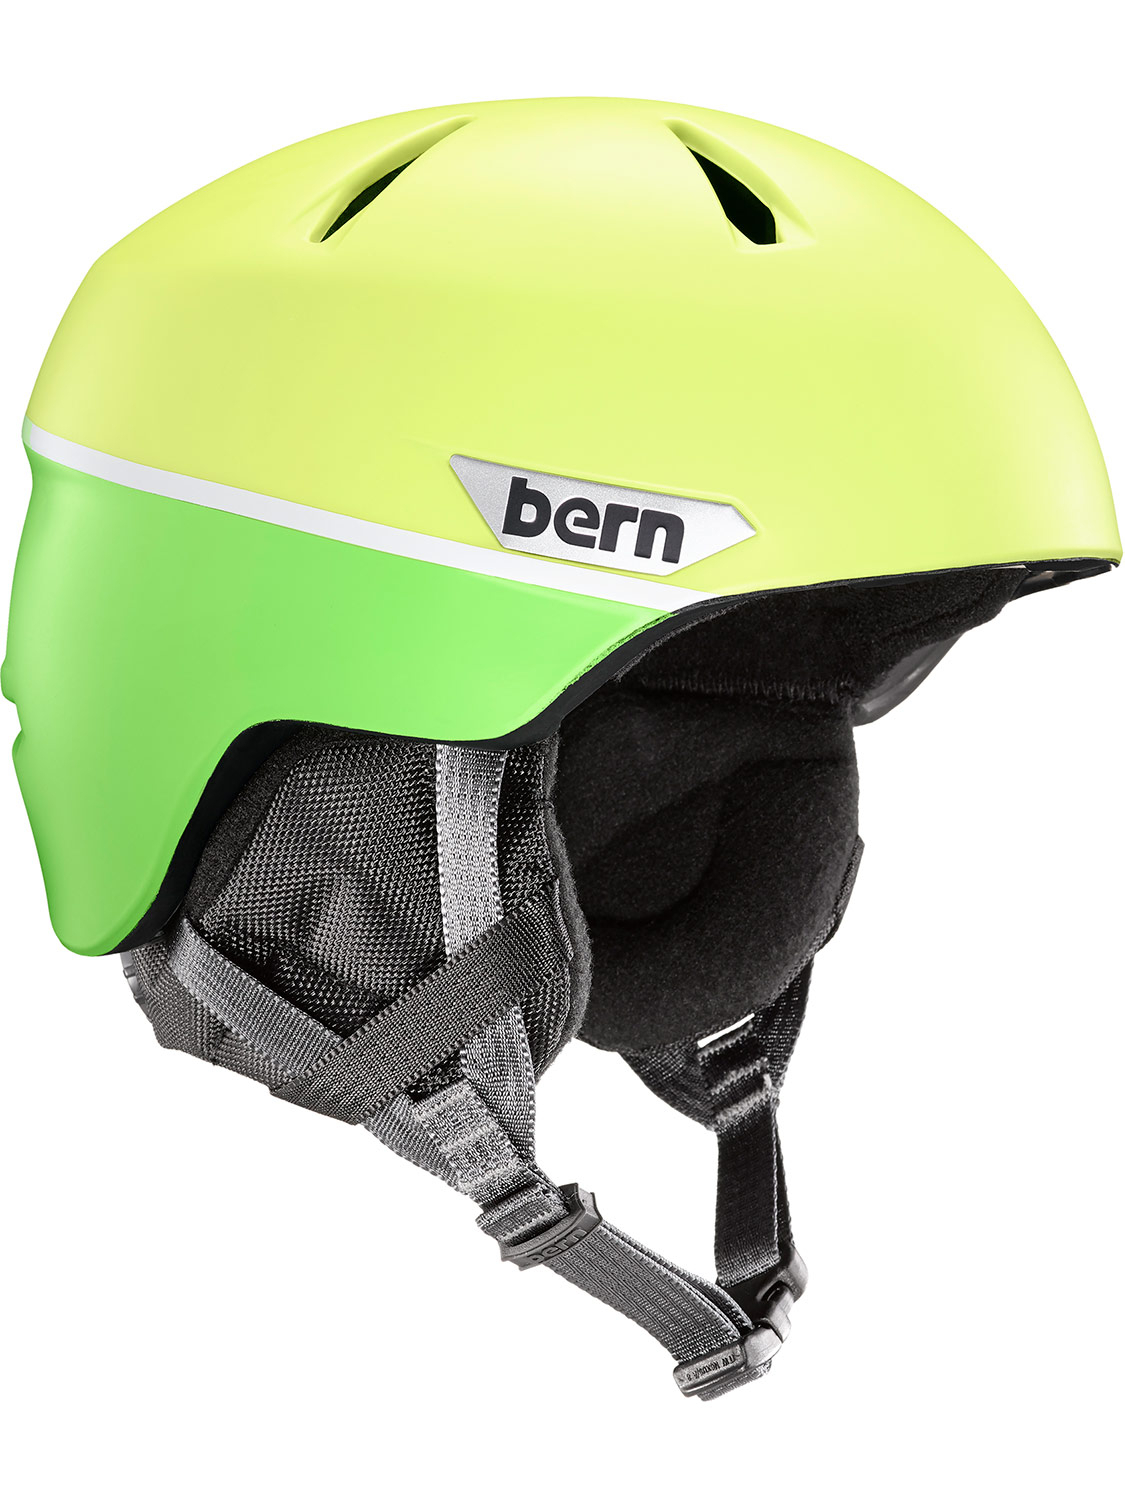 Bern Boys Weston Junior Helmet Green - Size: XS-S